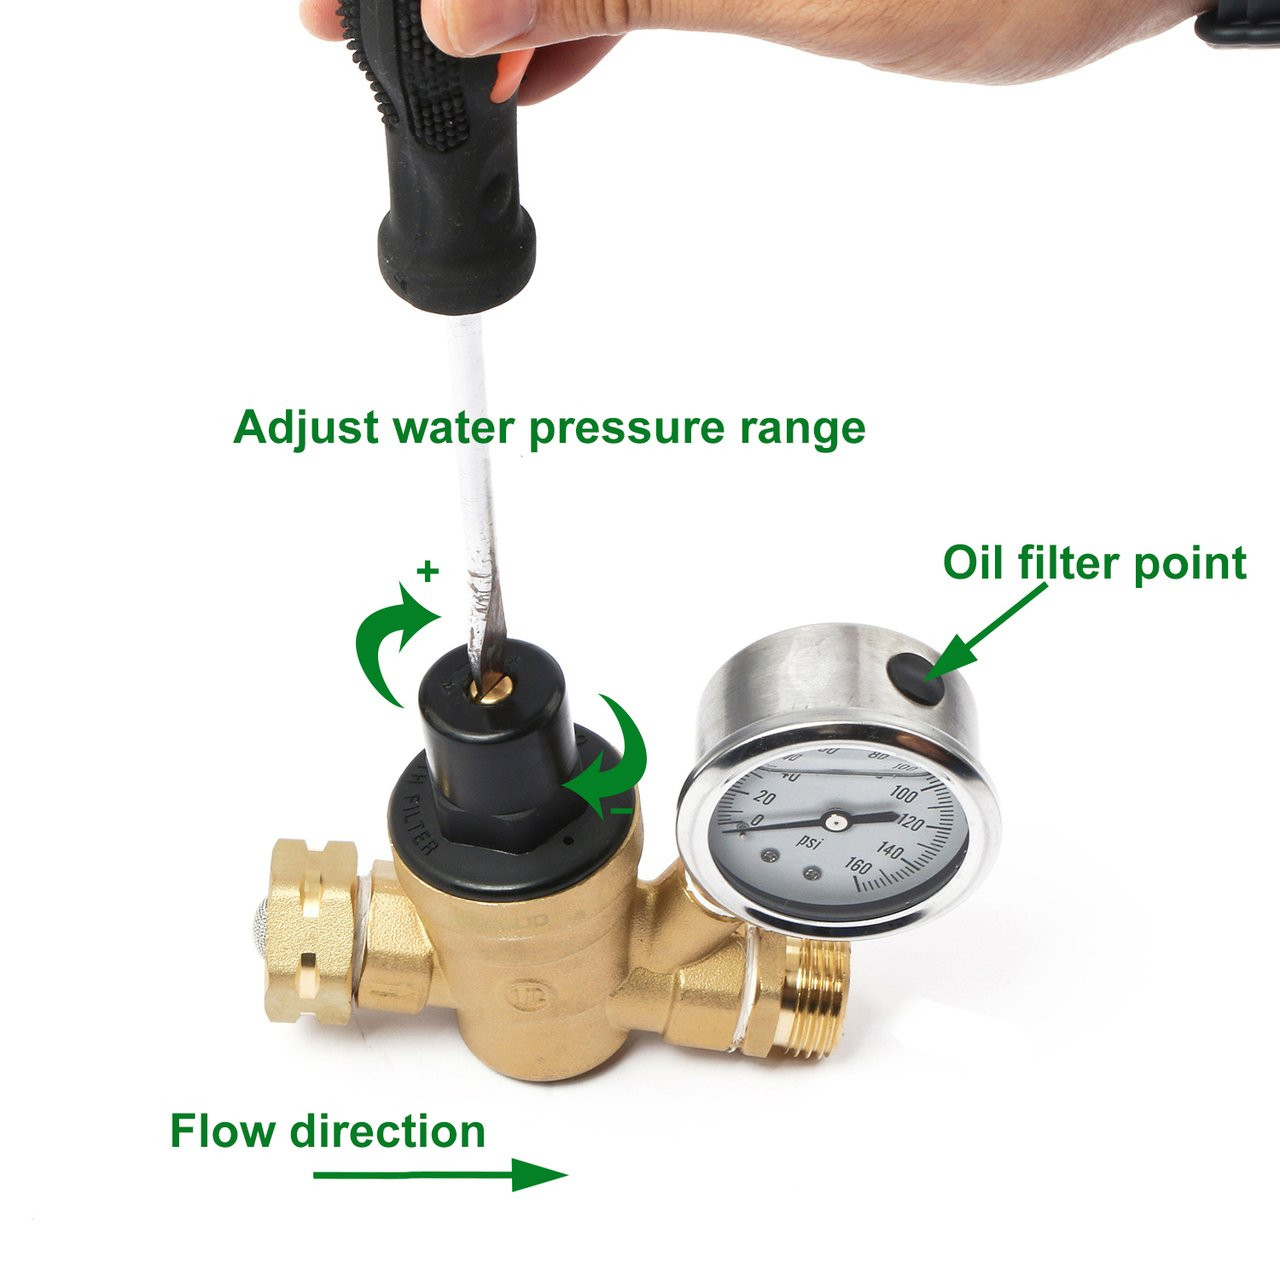 Water Regulator Valve- Lead Free Brass Adjustable RV Pressure Regulator with Pressure Gauge and Water Filter Net by U.S. Solid